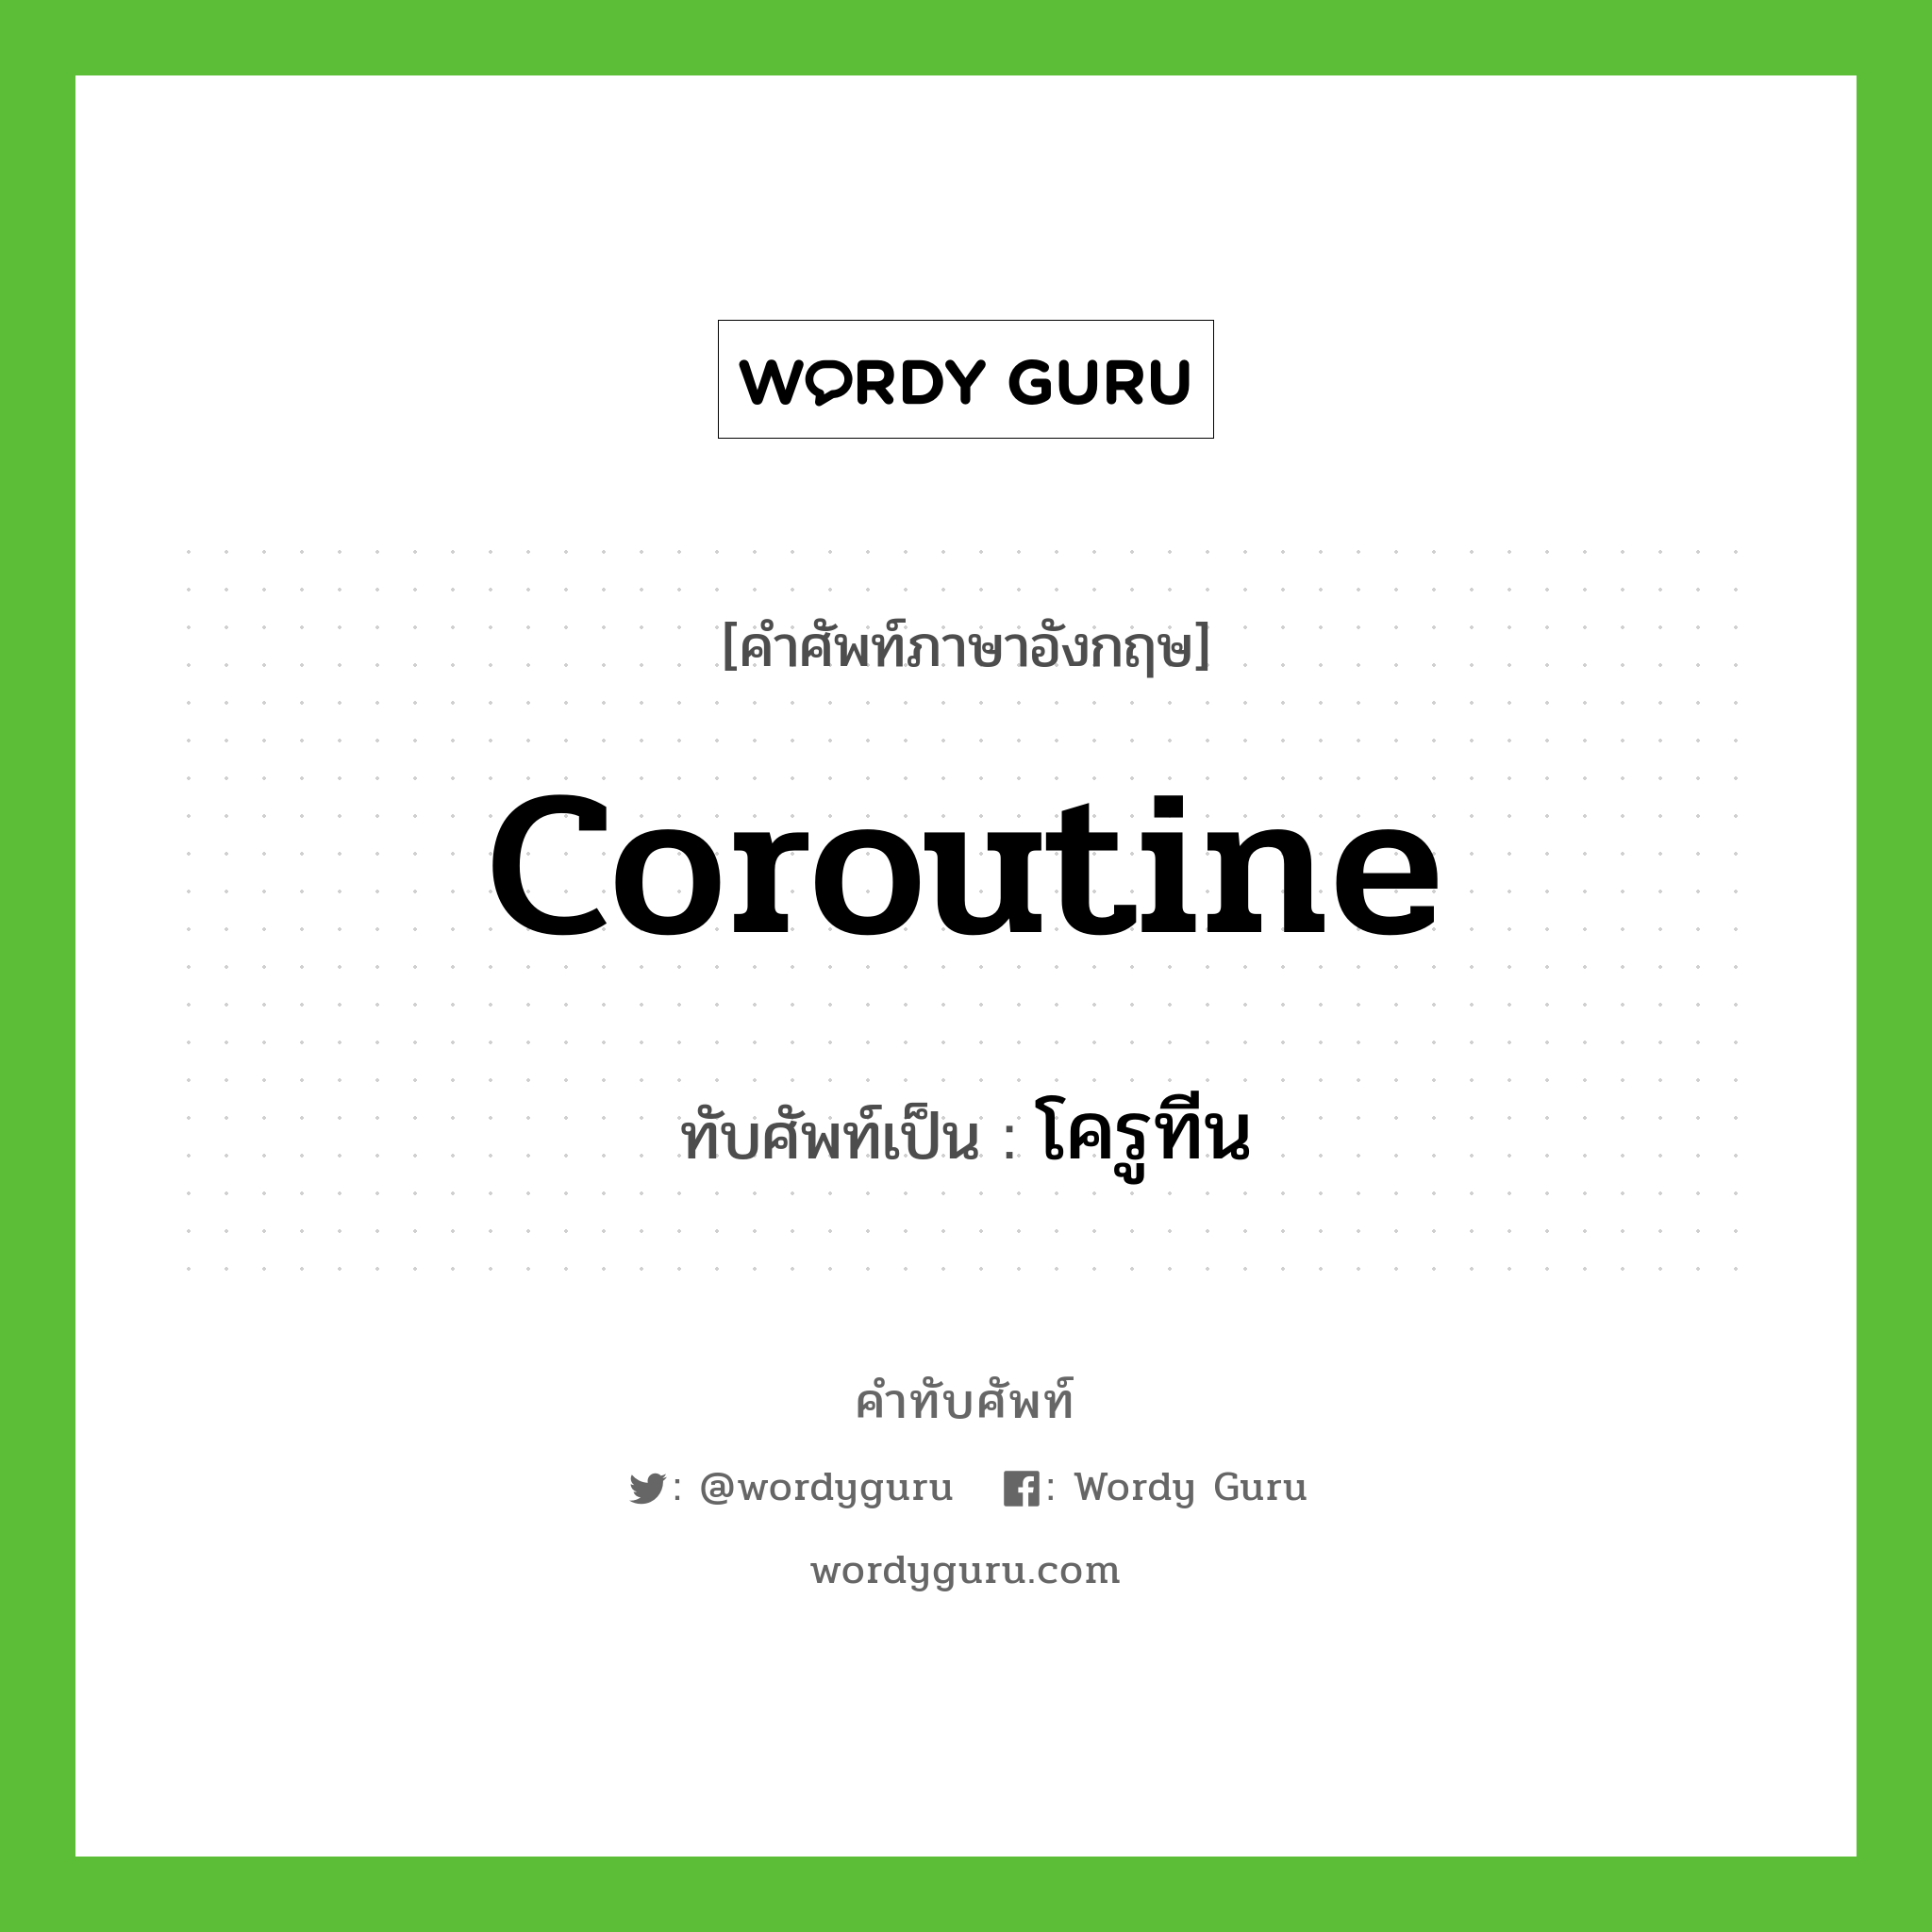 coroutine เขียนเป็นคำไทยว่าอะไร?, คำศัพท์ภาษาอังกฤษ coroutine ทับศัพท์เป็น โครูทีน